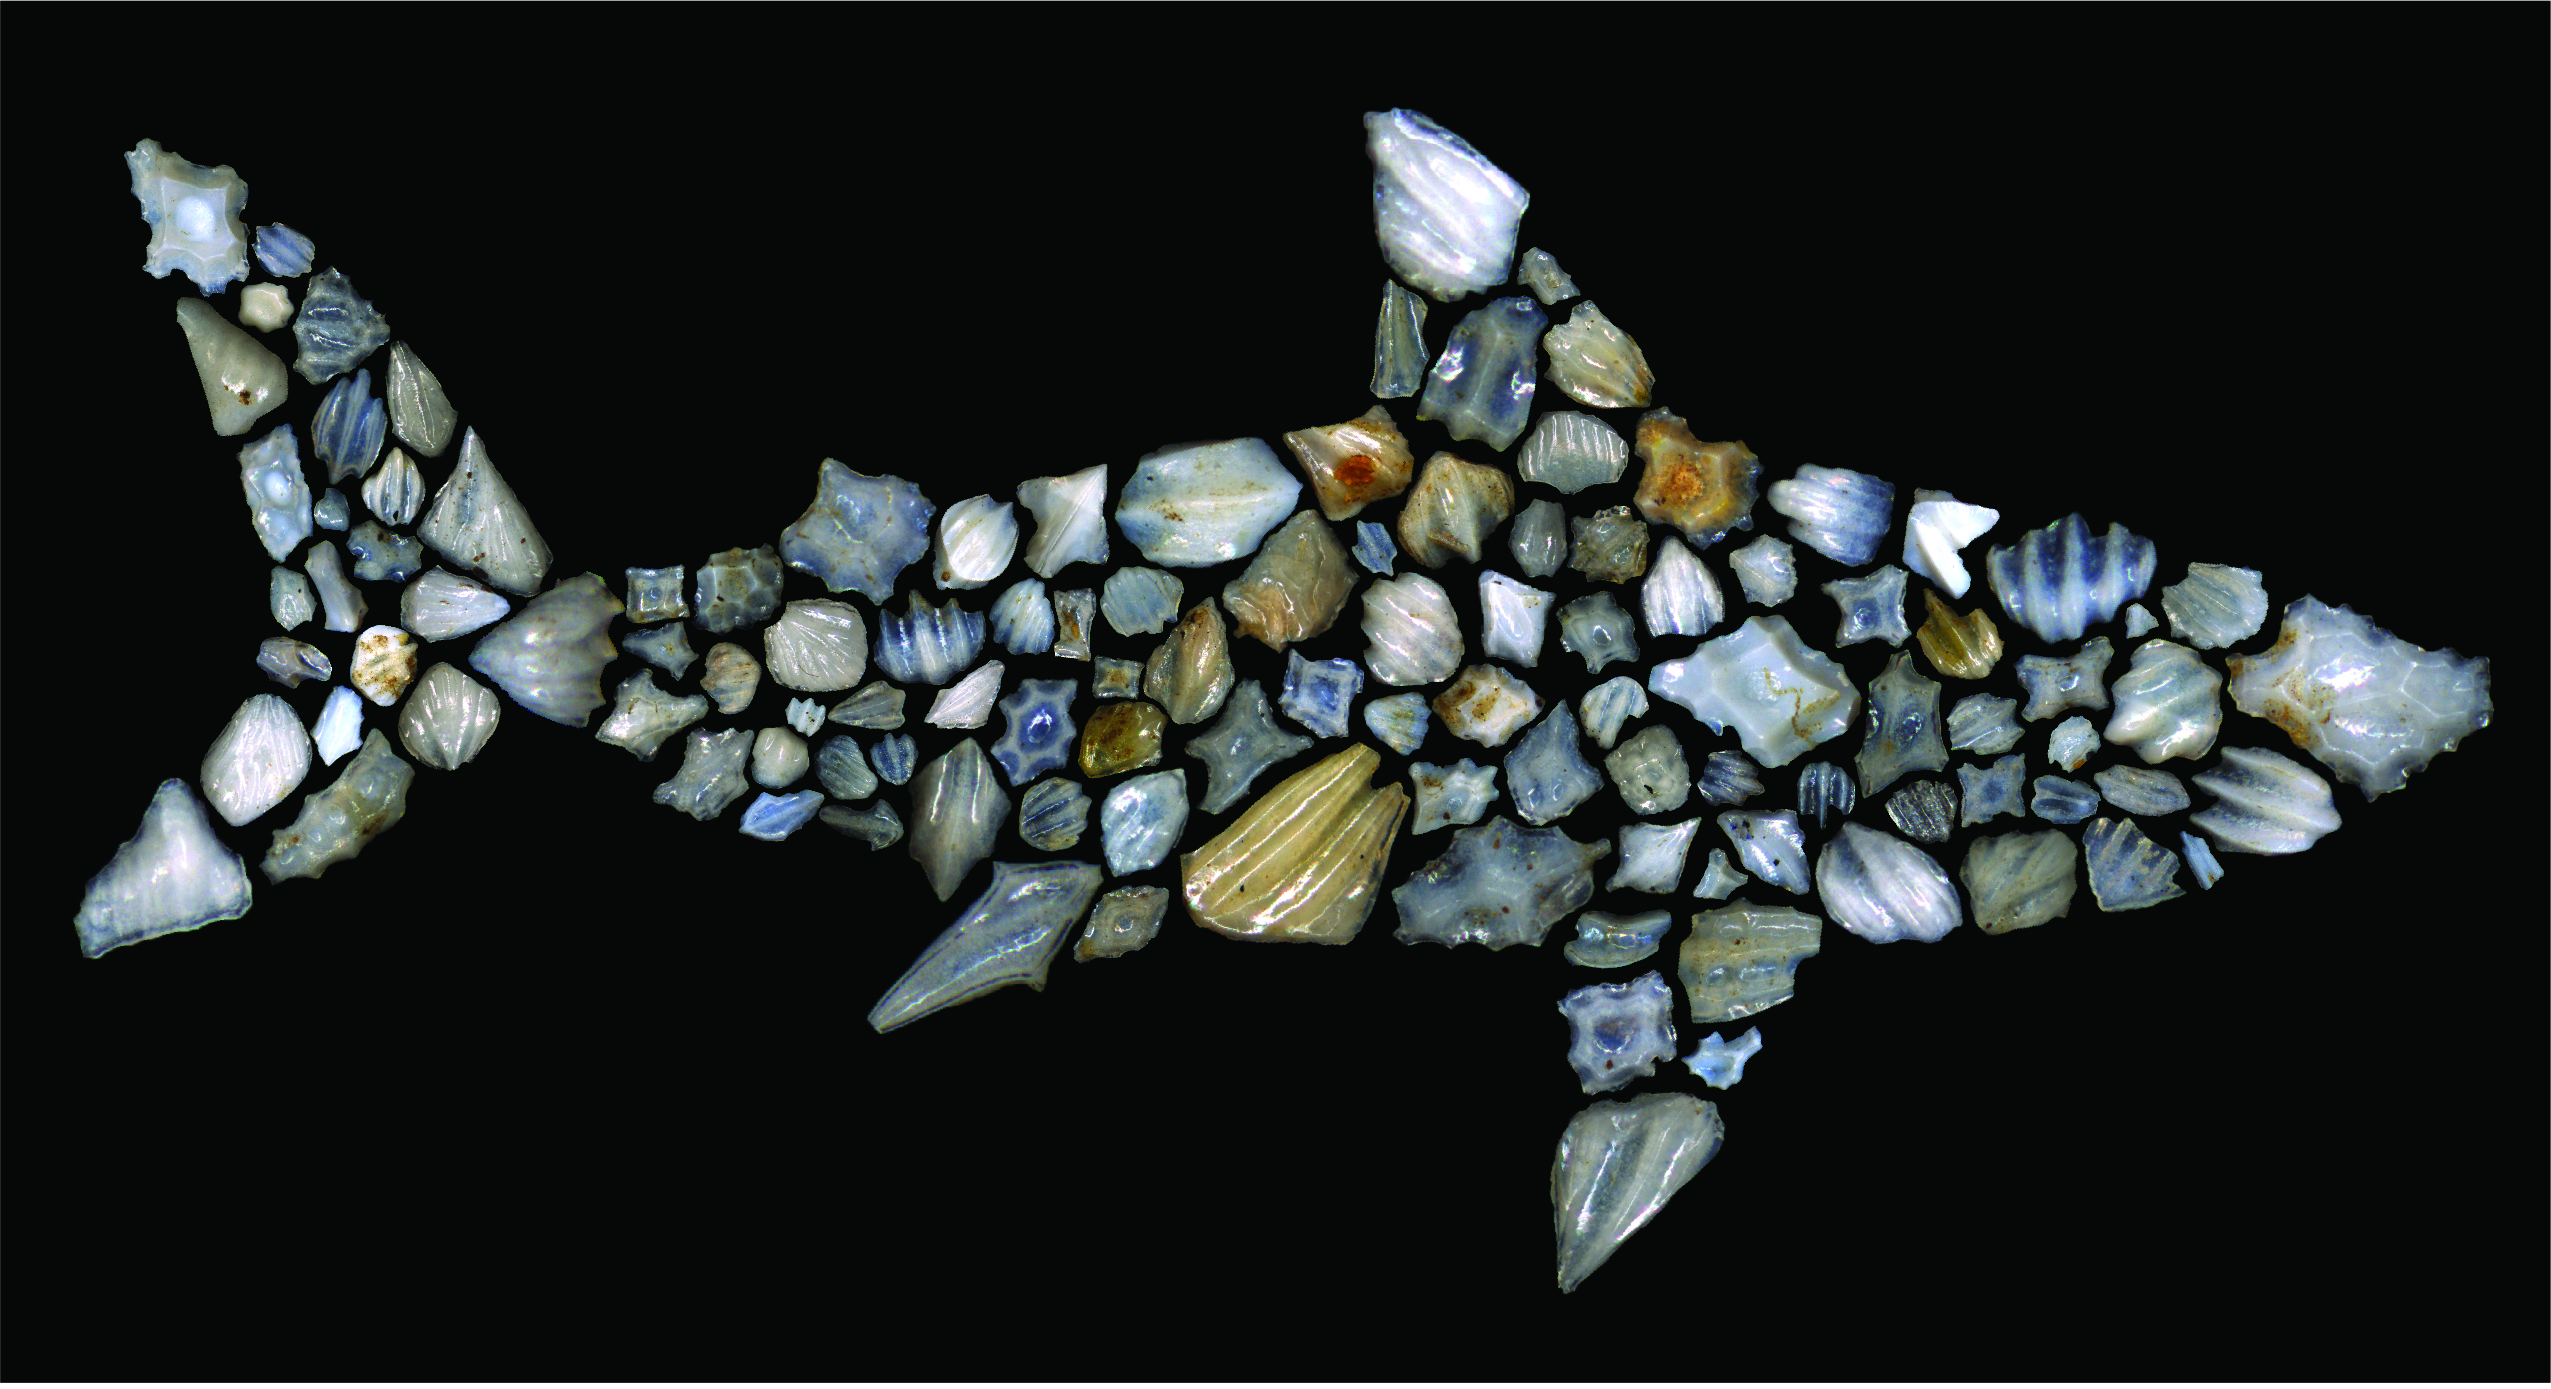 Fossils arranged in shape of shark